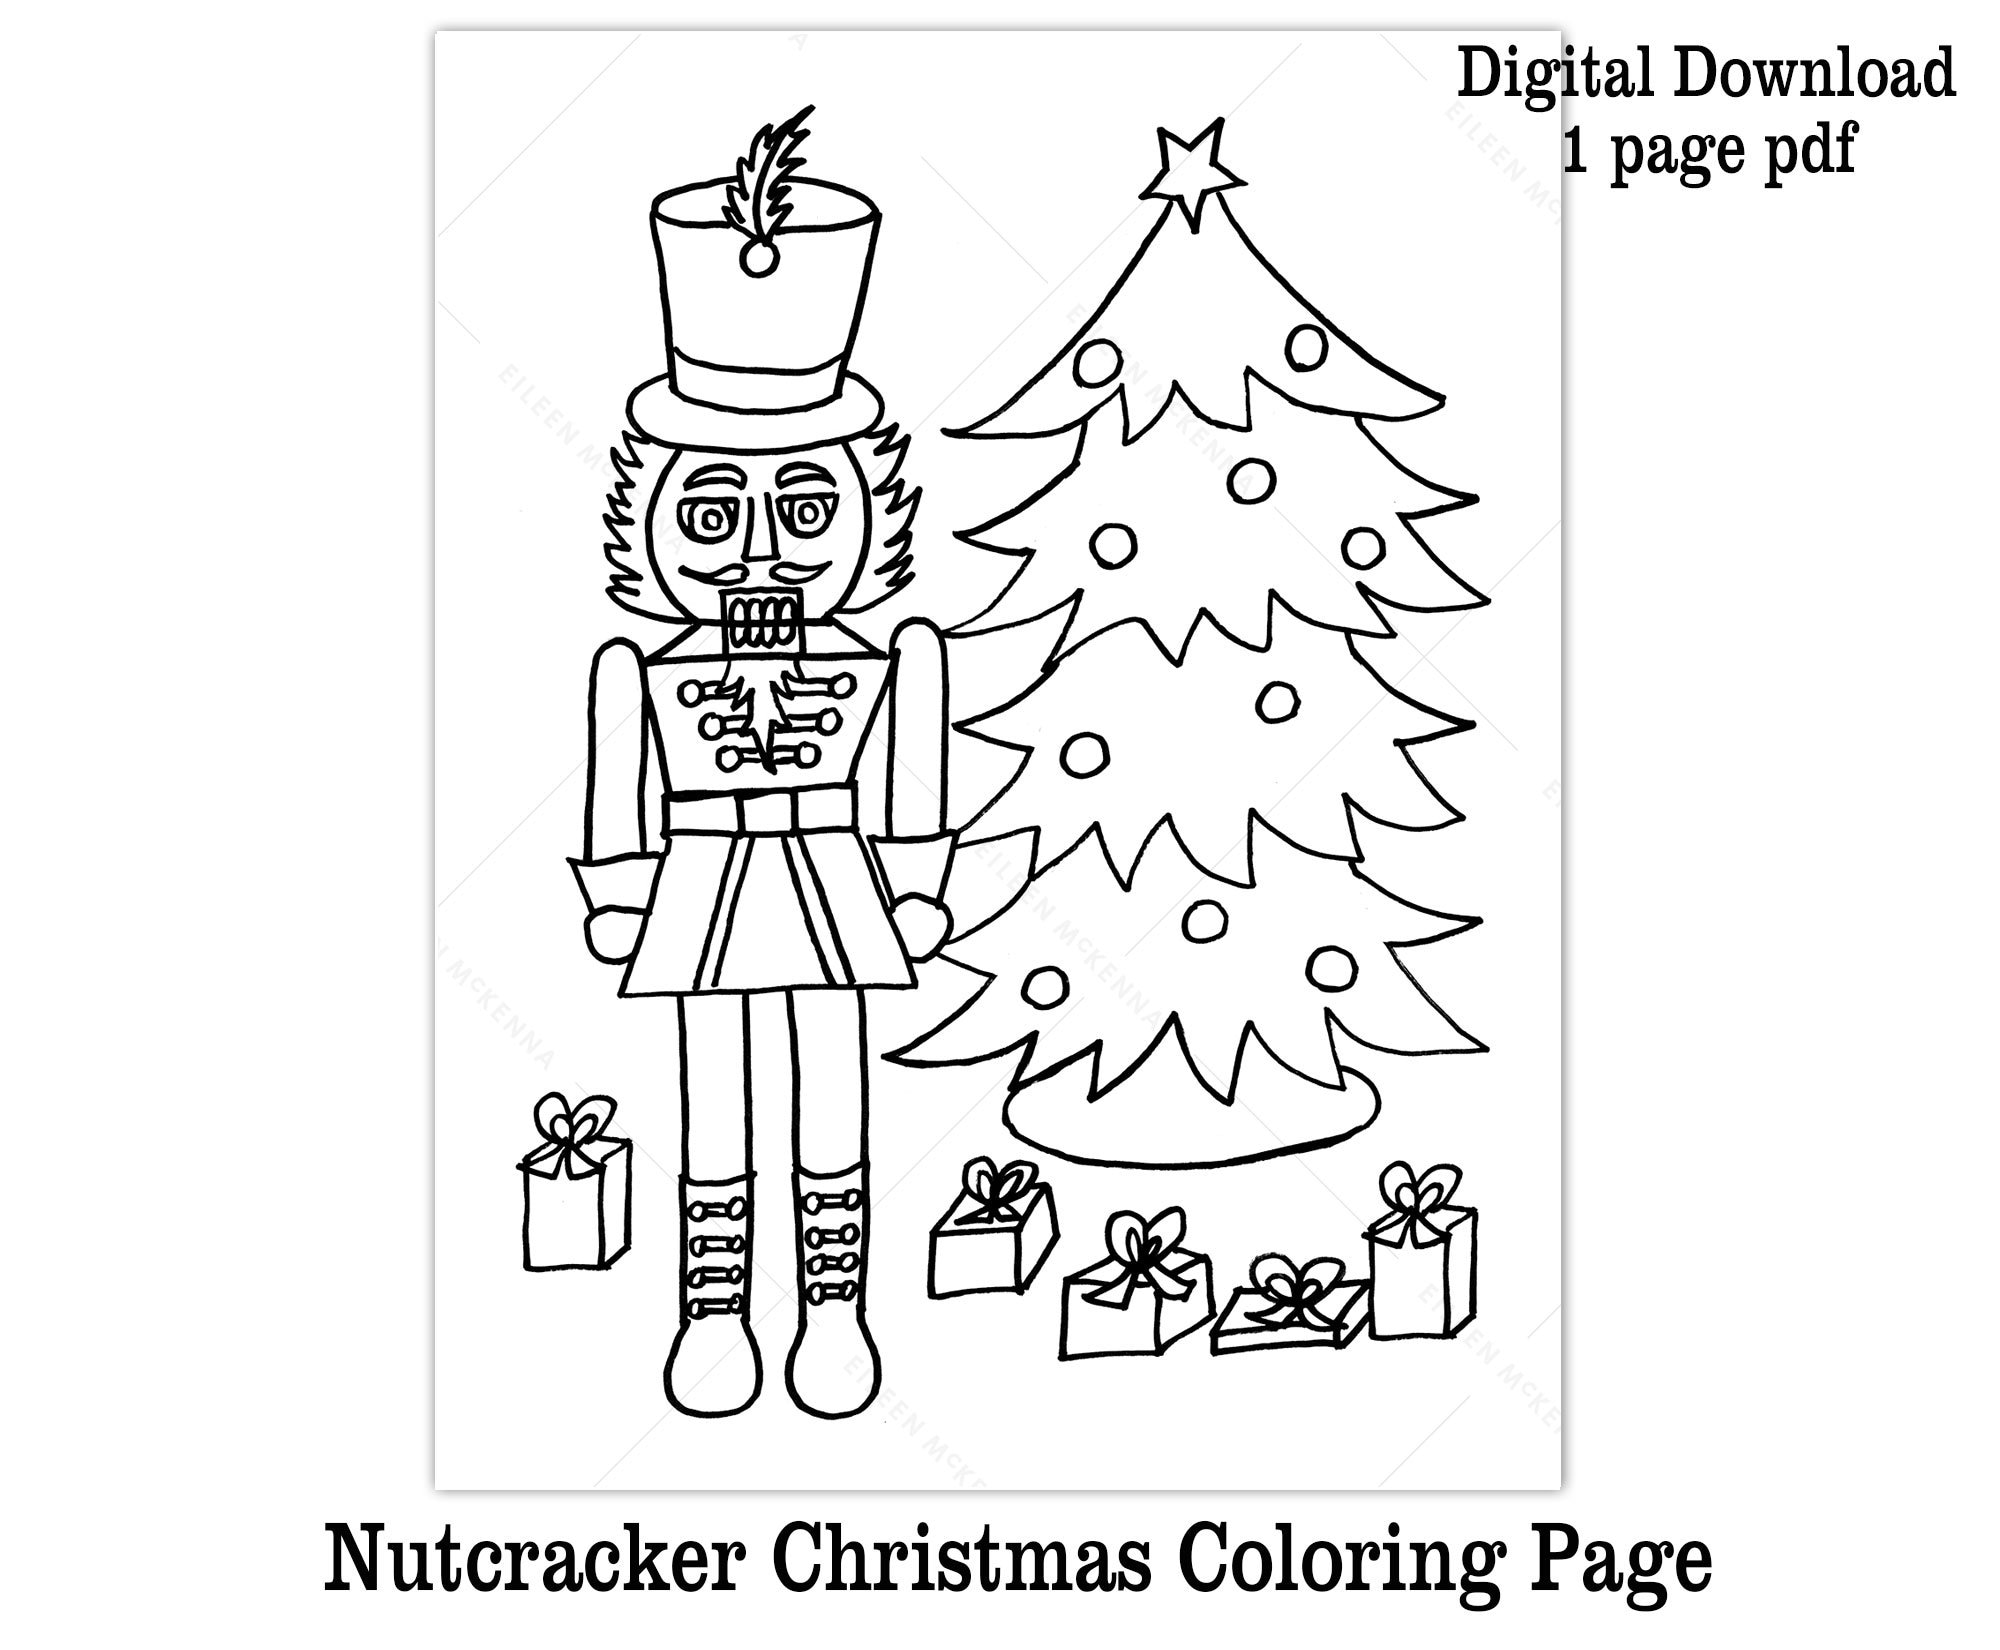 Nutcracker christmas coloring page printable kids christmas coloring sheet fun kids art holiday activity christmas tree digital download download now